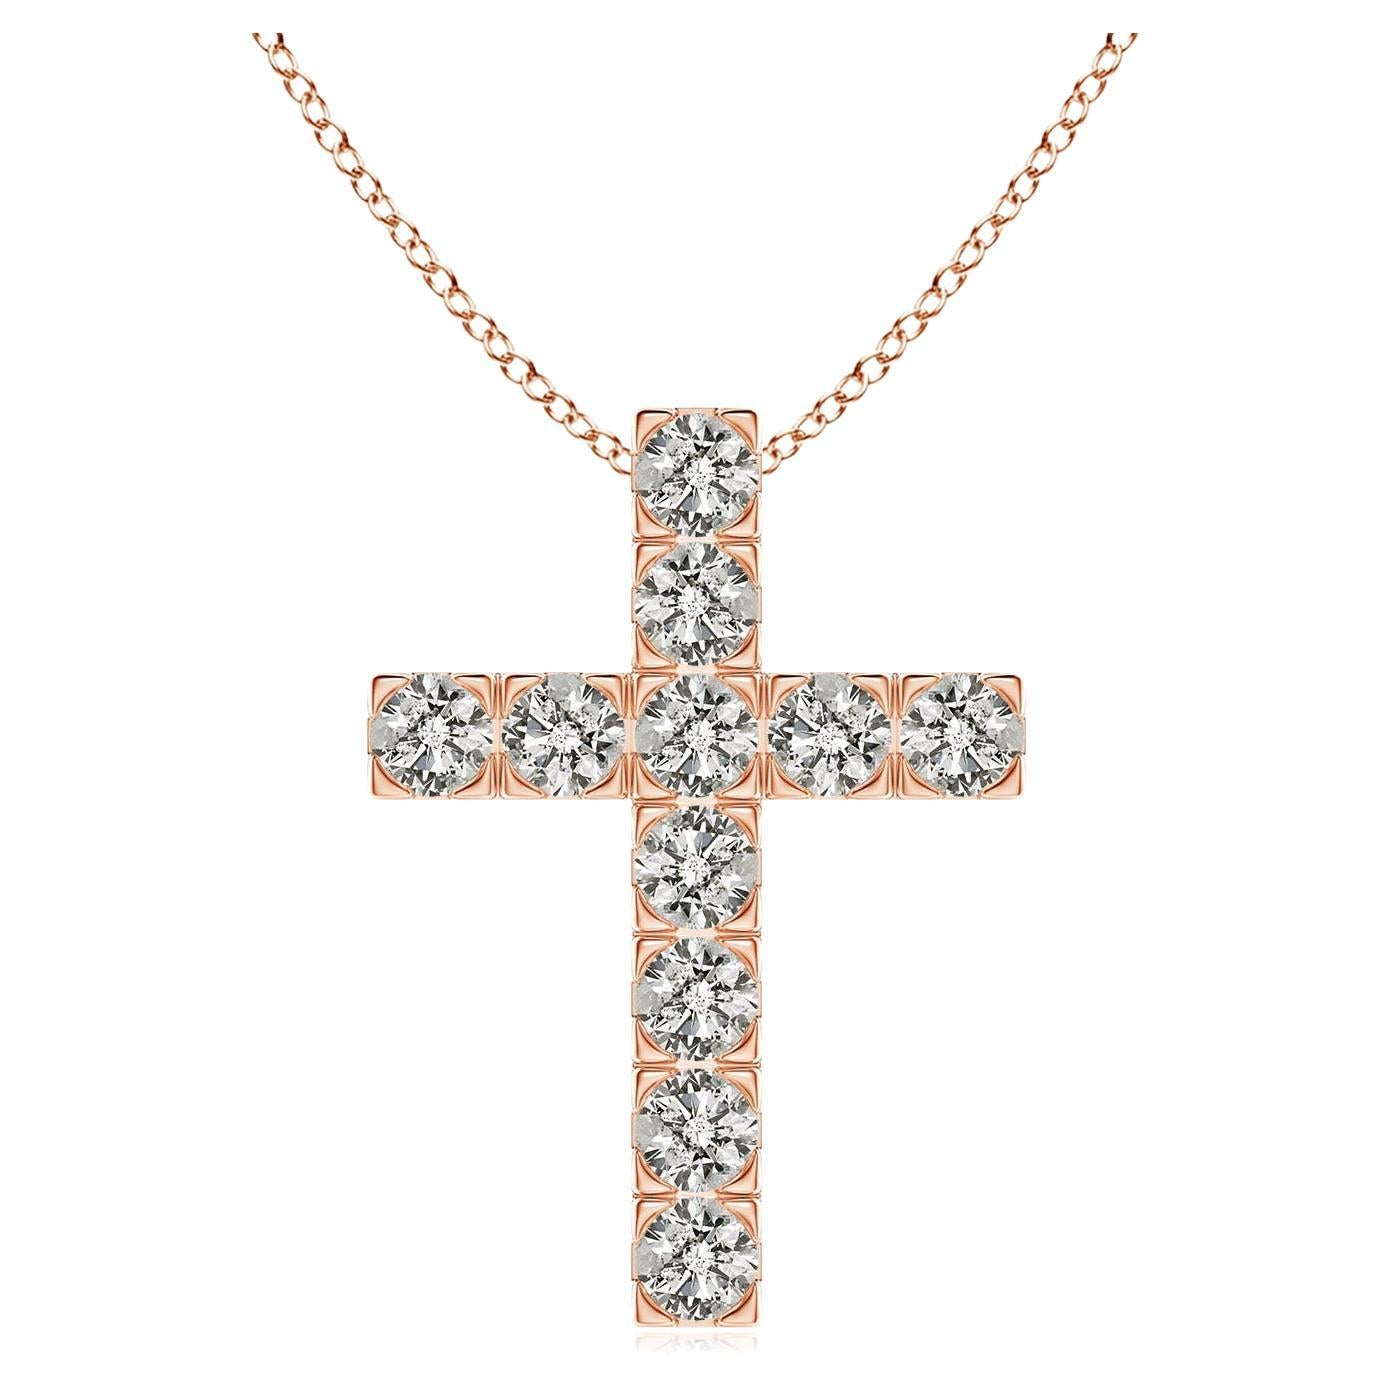 ANGARA Natural 1.17cttw Diamond Cross Pendant in 14K Rose Gold (Color- K, I3) For Sale